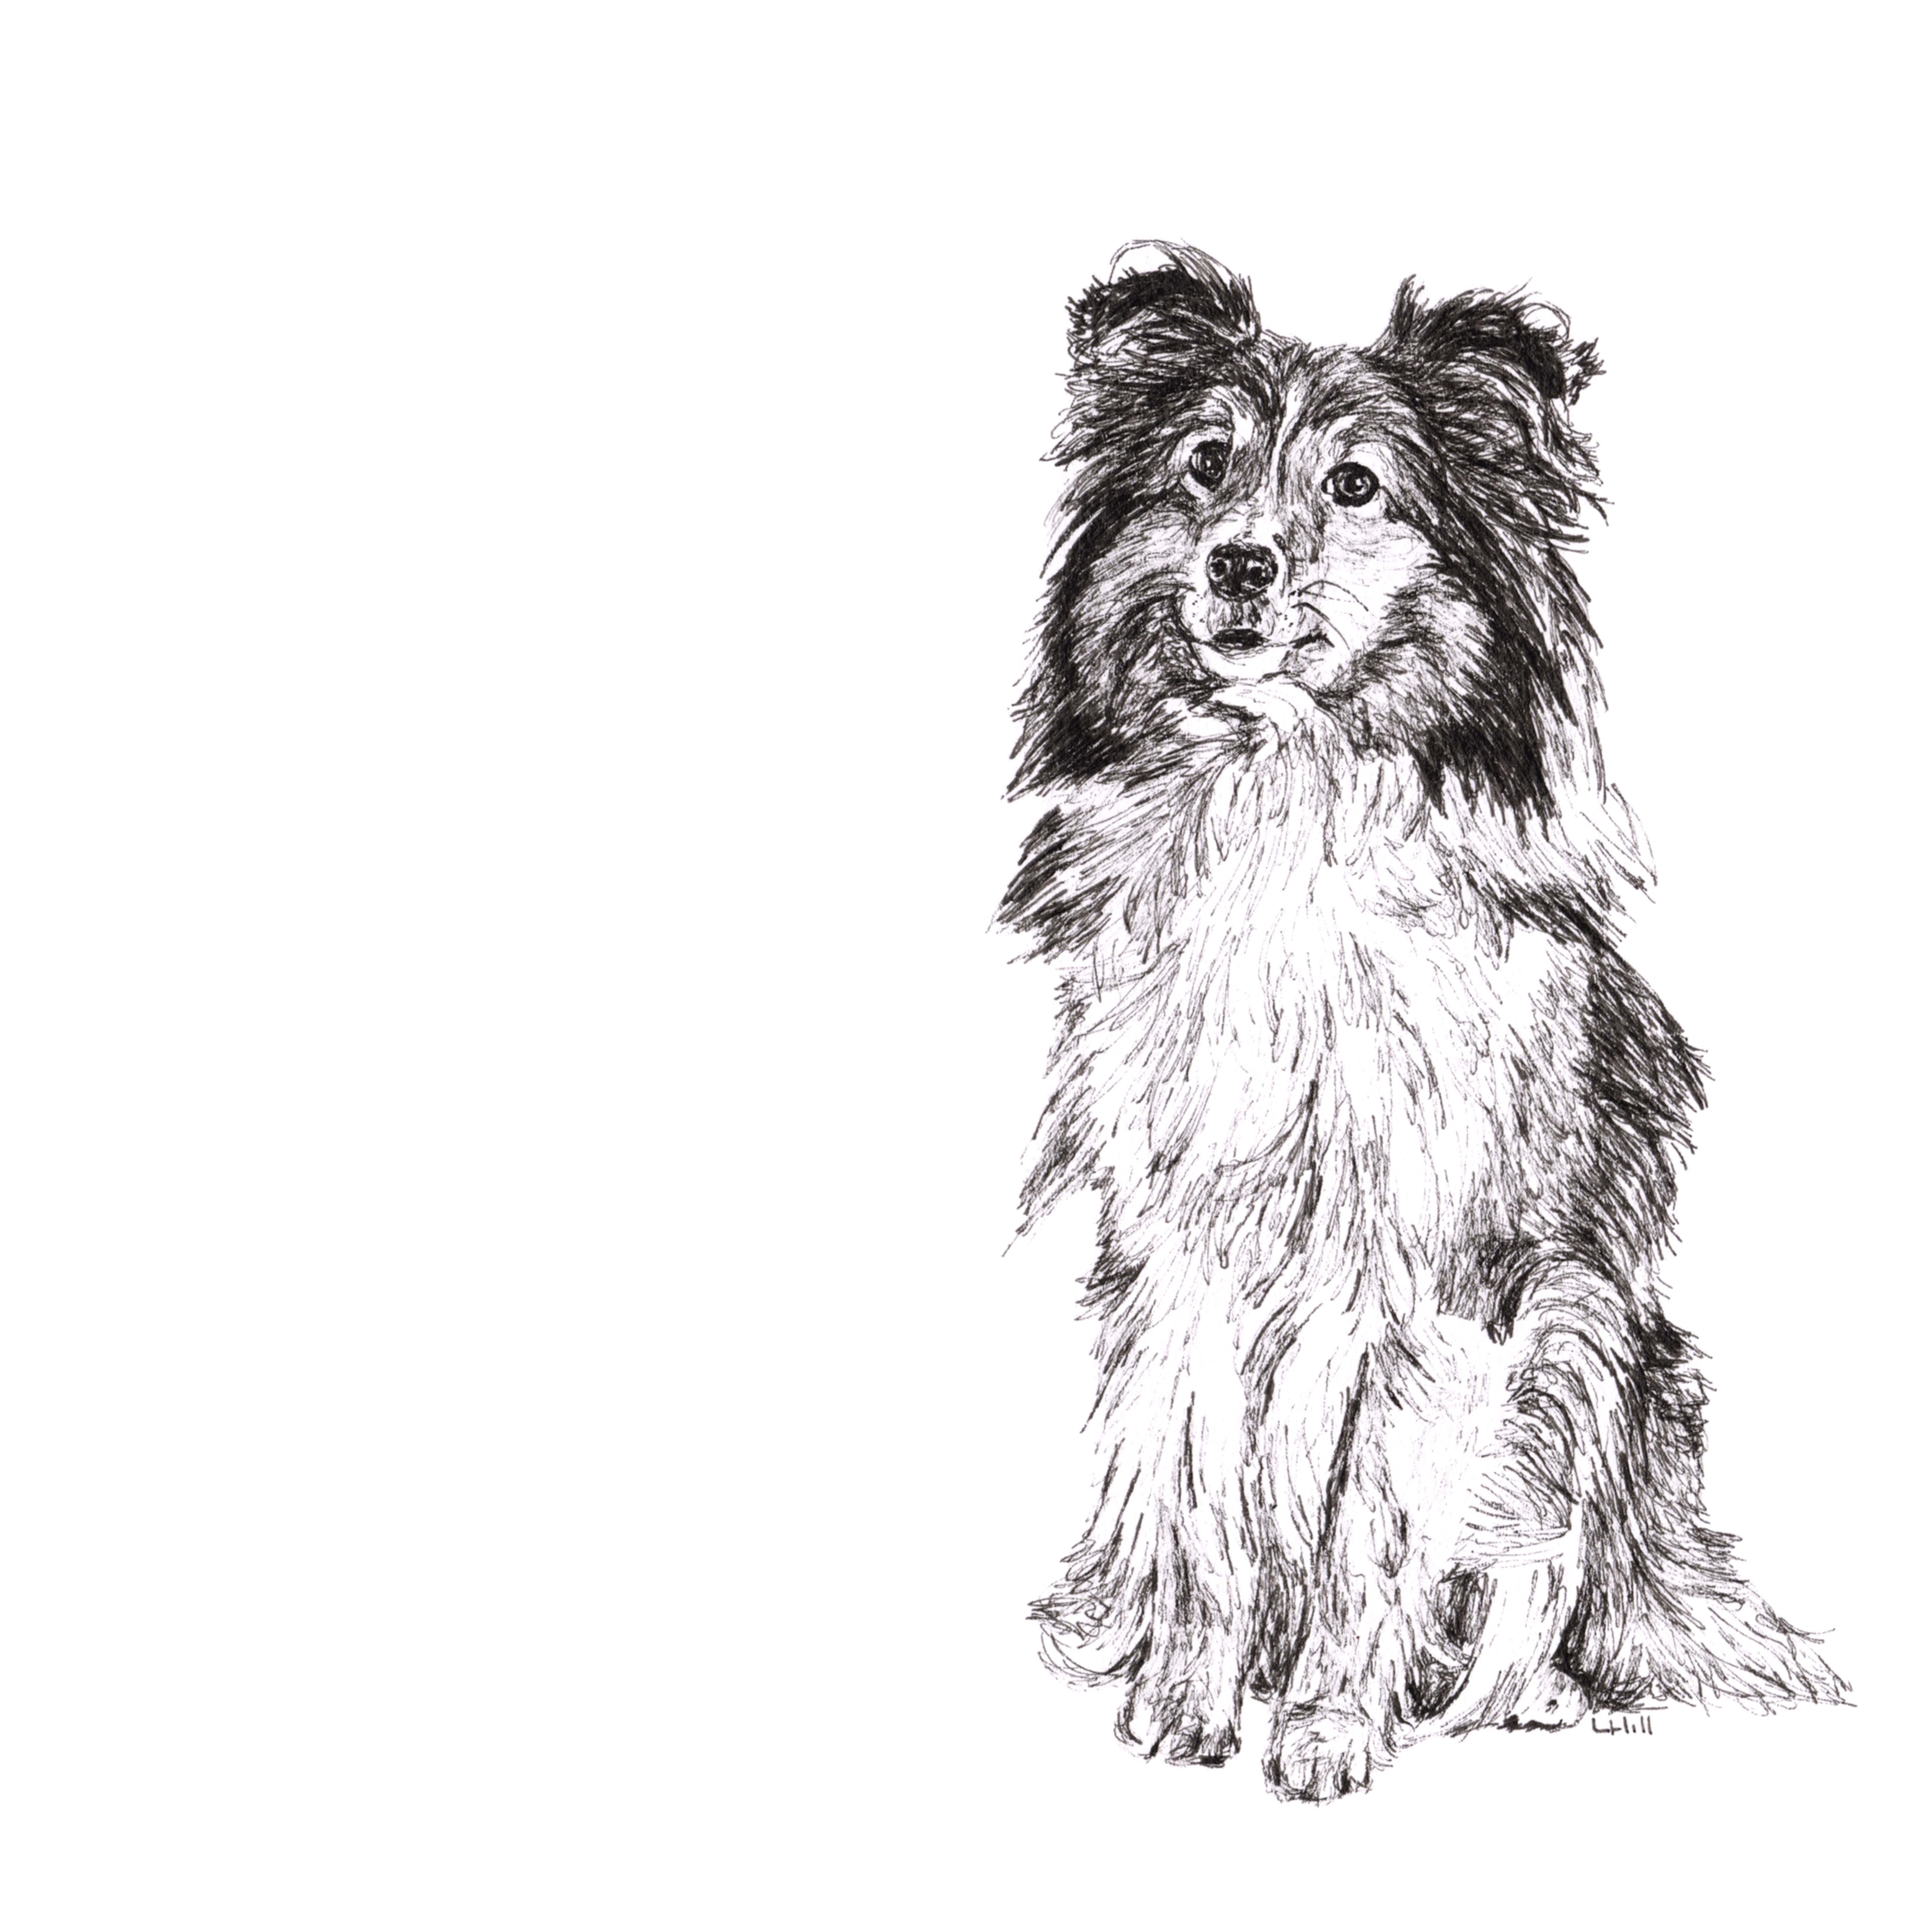 Shetland Sheepdog pen and ink illustration by Louisa Hill